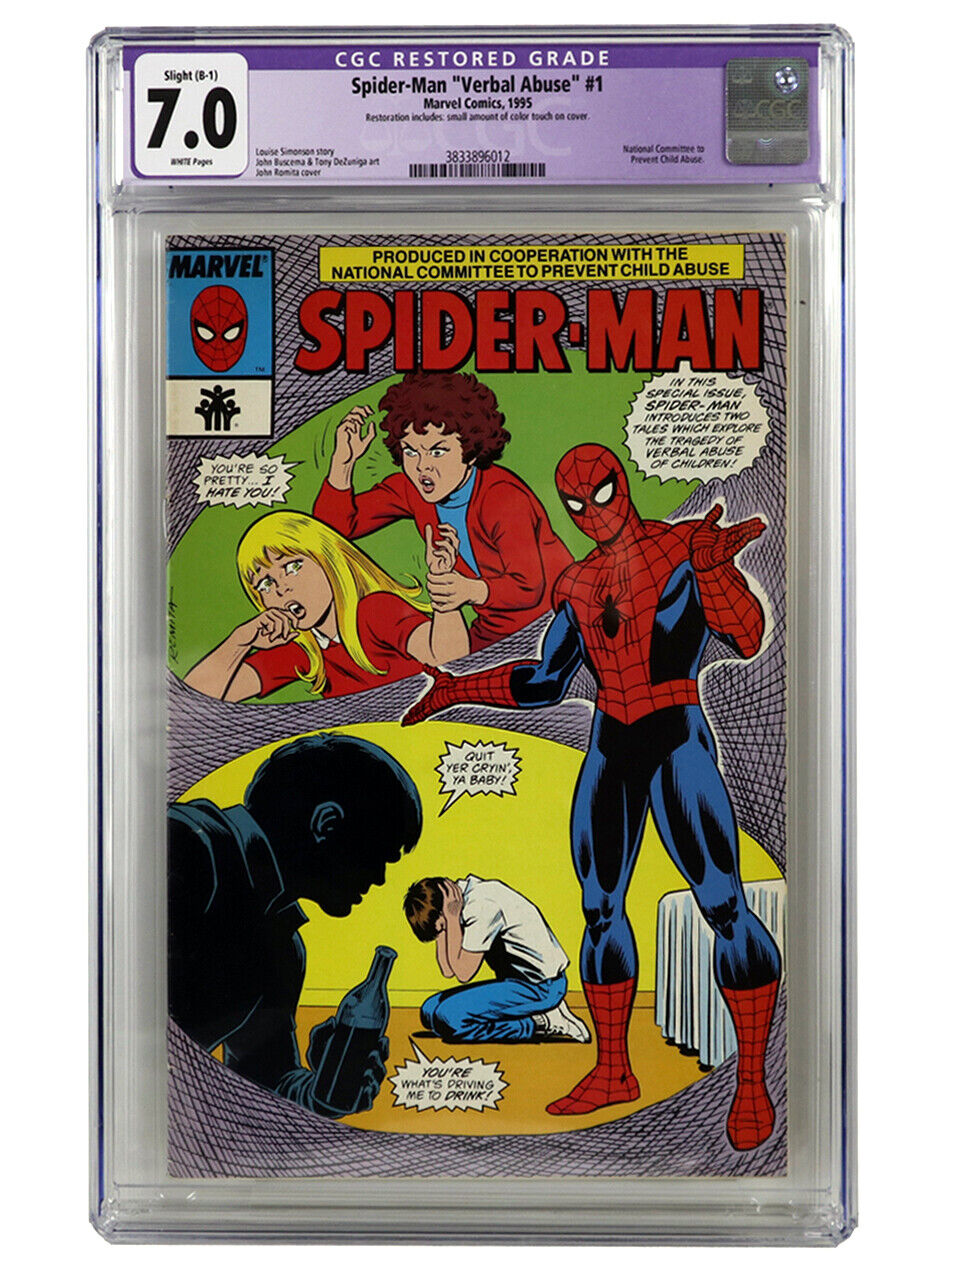 Spider-Man Verbal Abuse #1 Variant CGC Restored Graded 7.0 Romita Marvel 1995